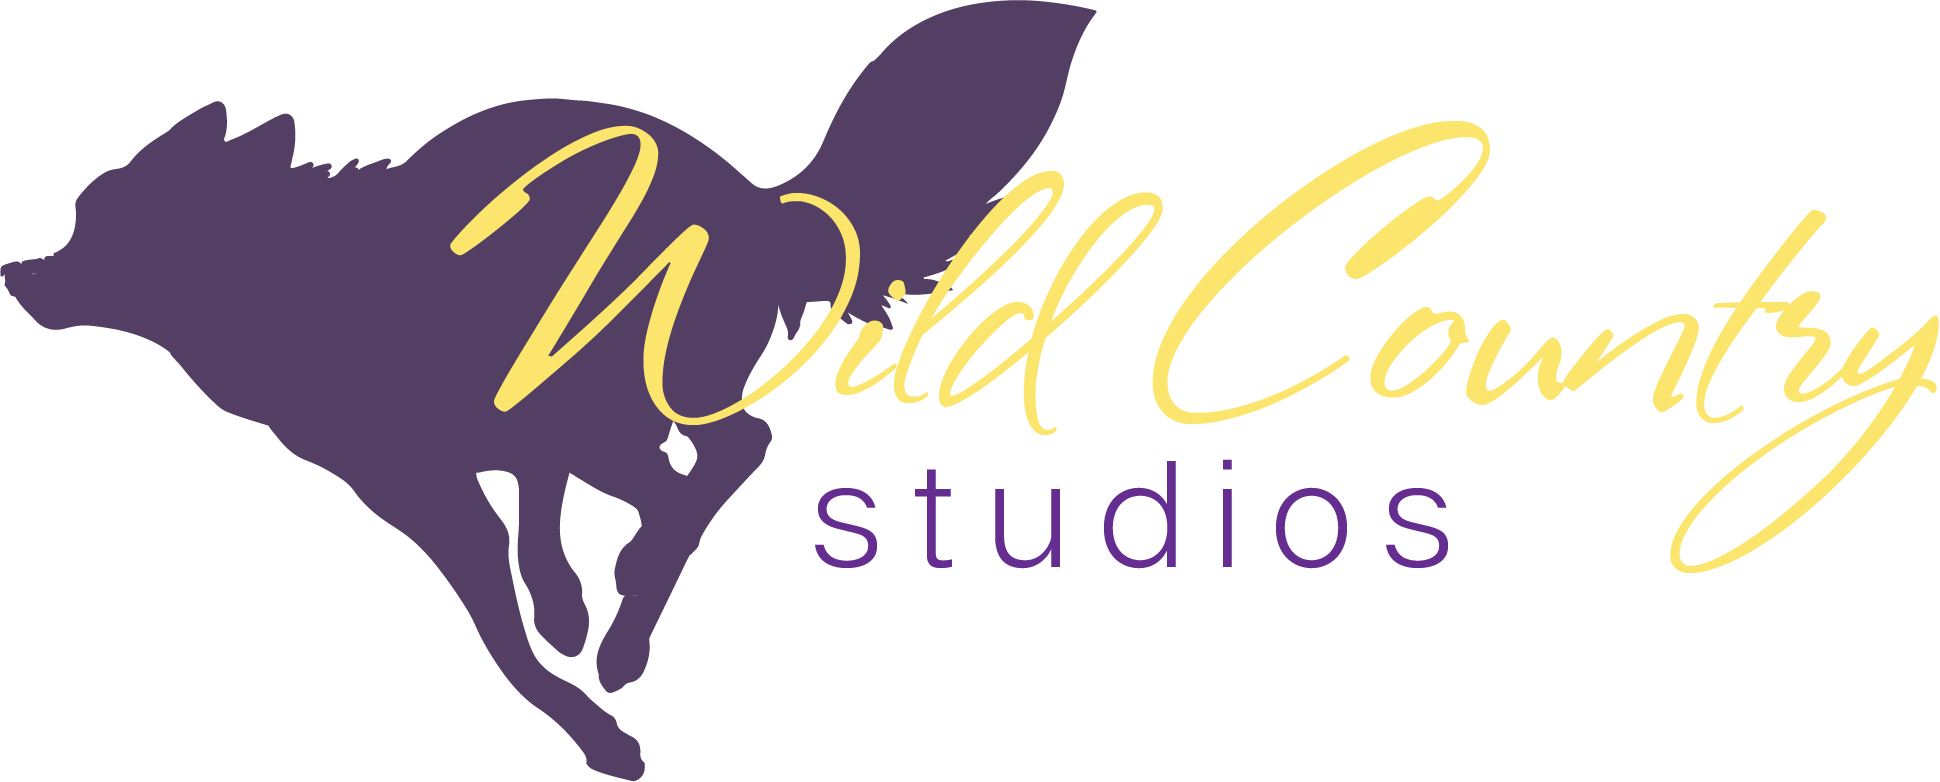 Wild-Country-Studios-logo-clr.png